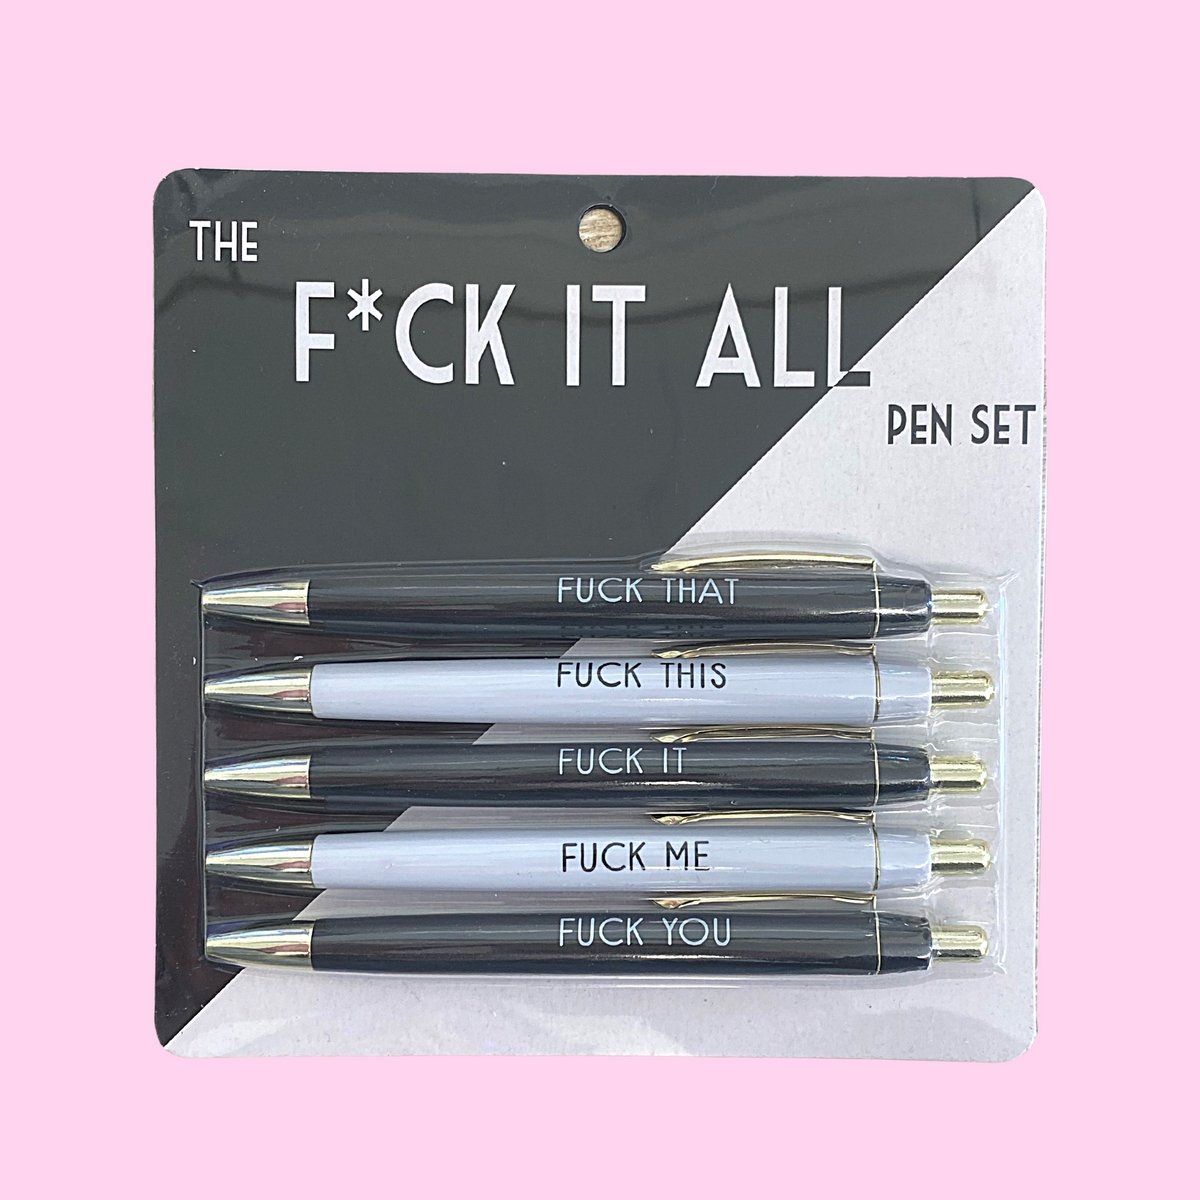 Fuck It All Pen Black Ink Pen Set - 5 Pens with Gold Hardware